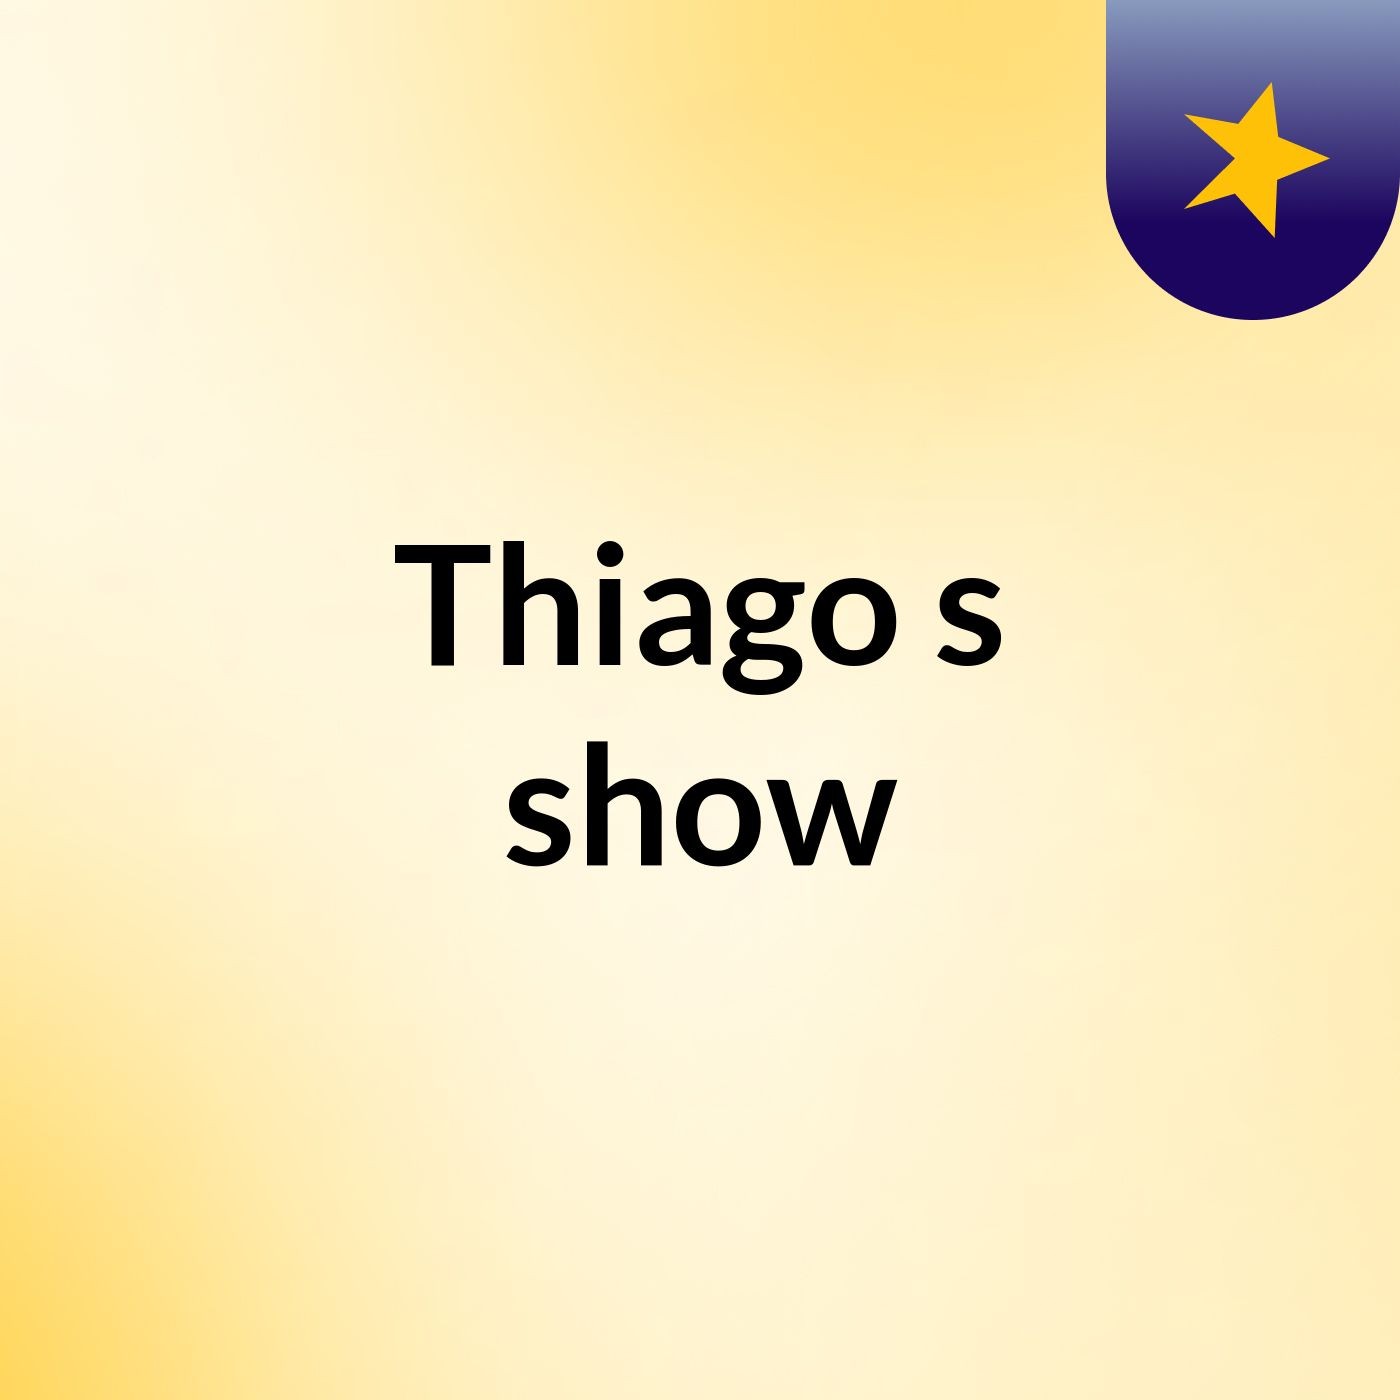 Thiago's show